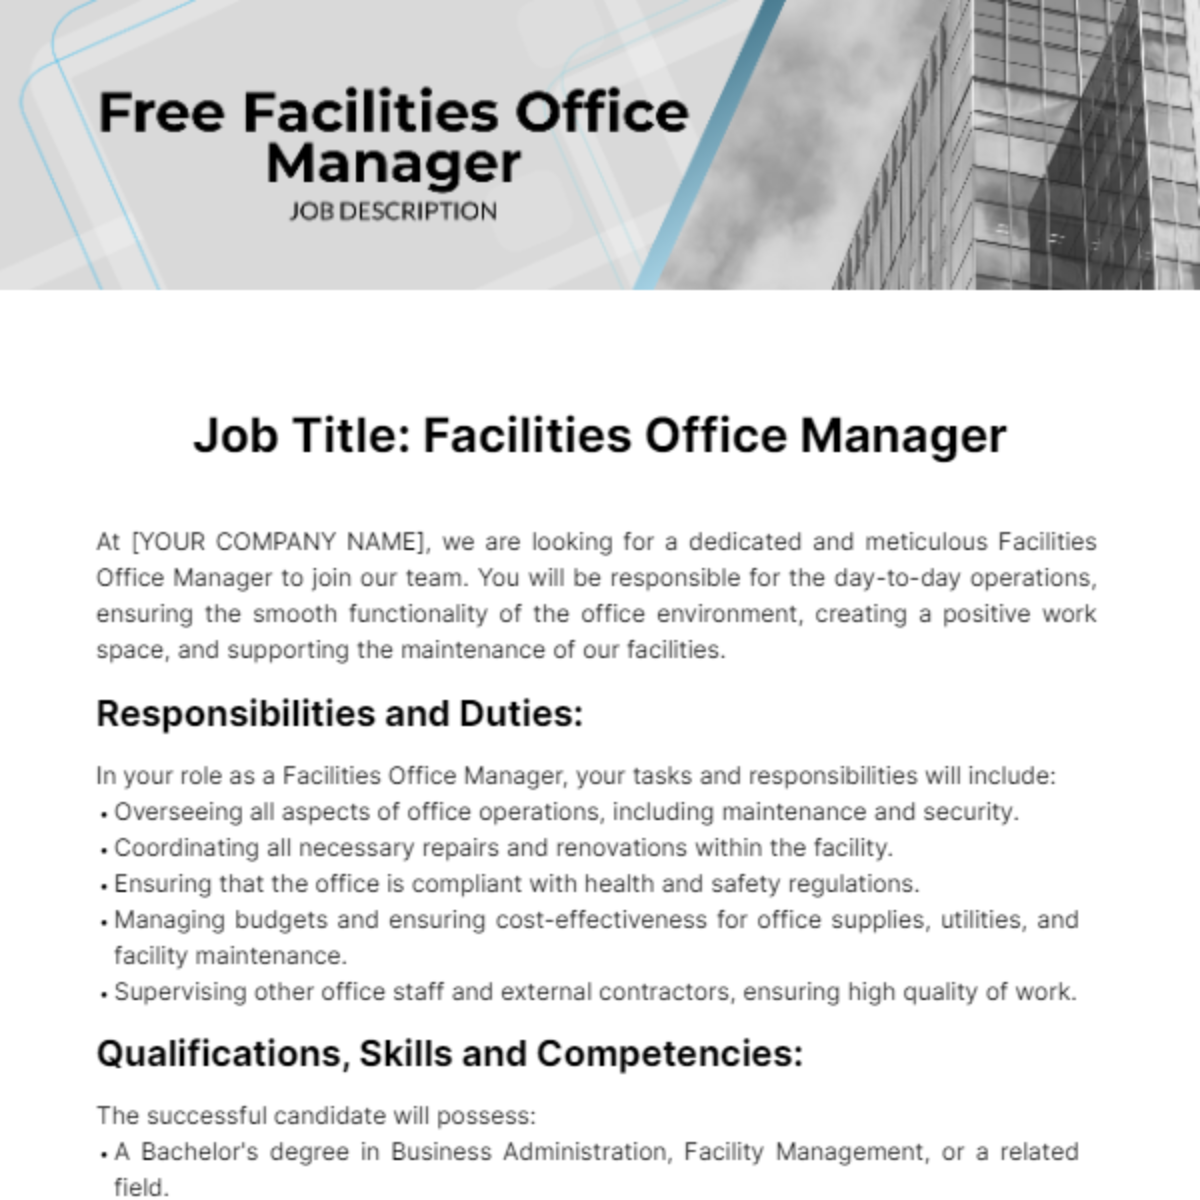 Free Facilities Office Manager Job Description Template